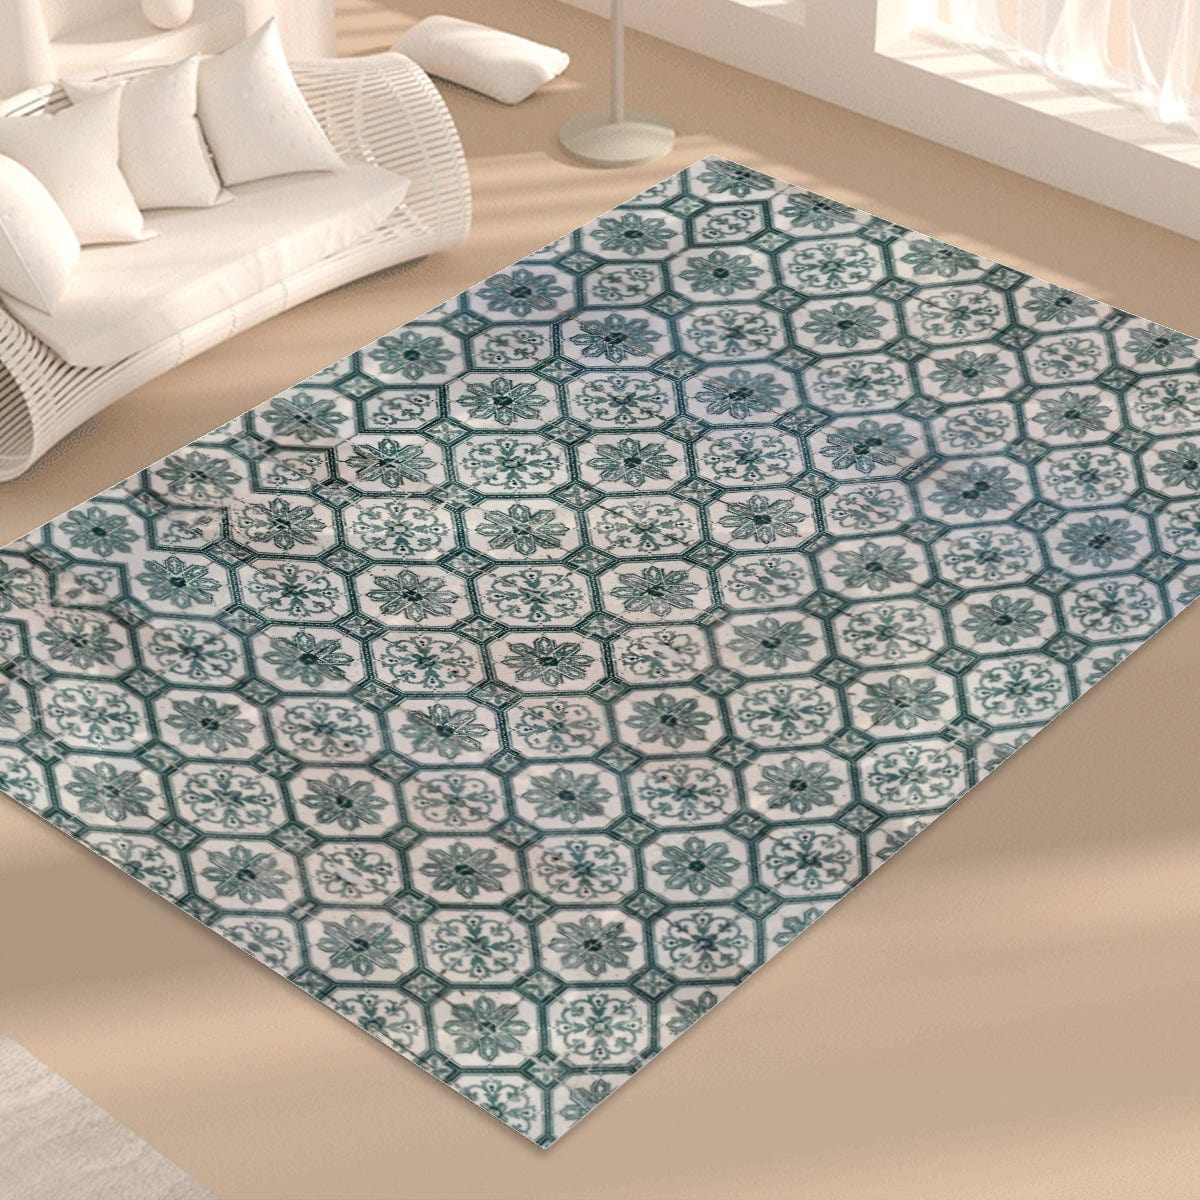 Yoycol Rug L / White Italian Blue - Foldable Rectangular Floor Mat